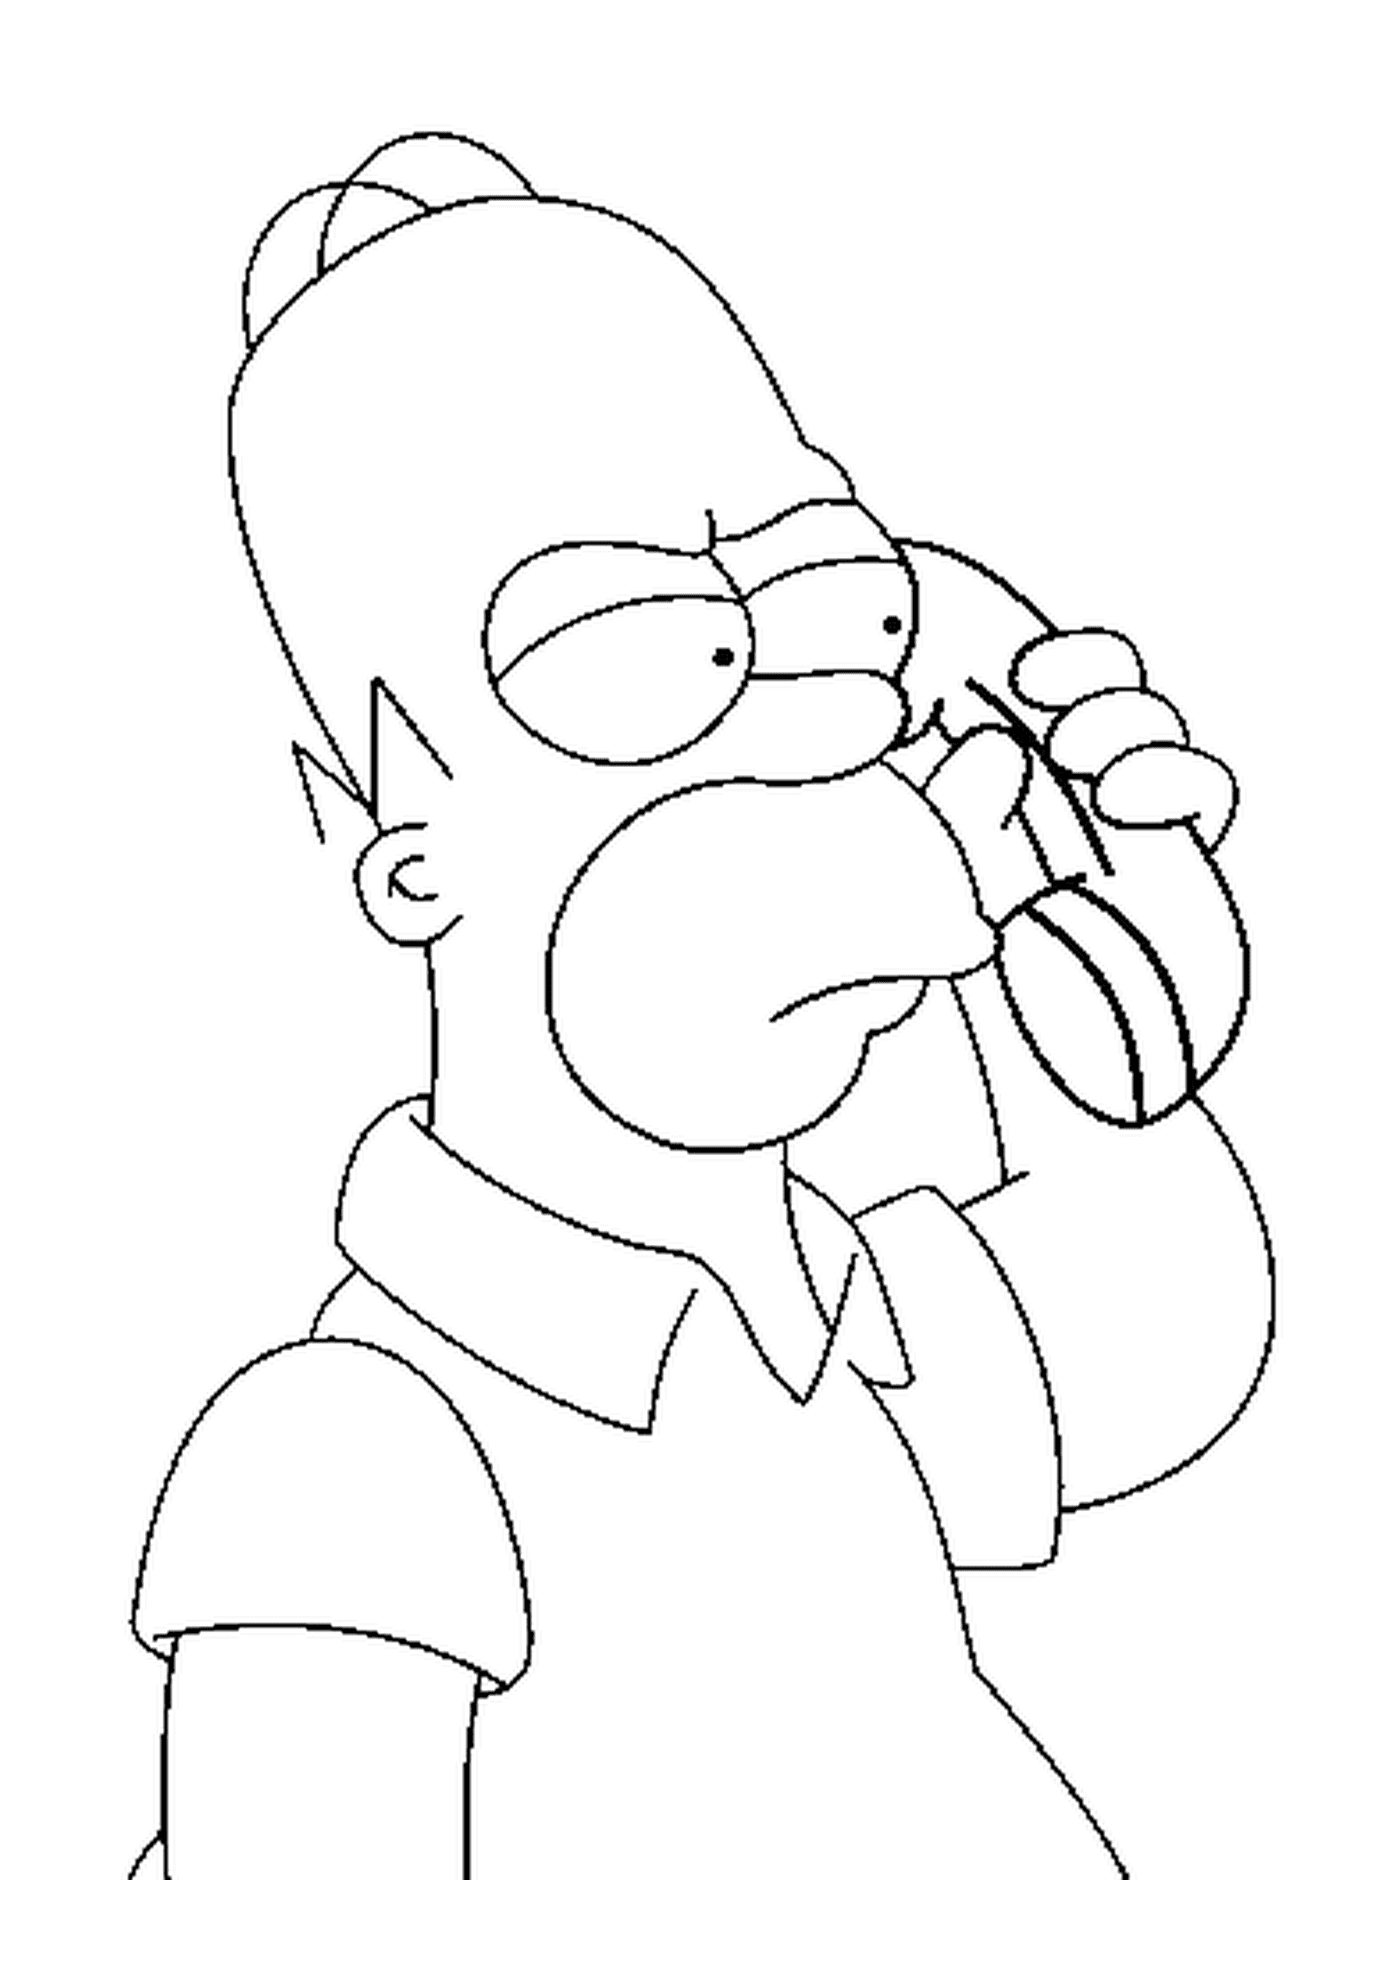  Homer sta parlando al telefono 